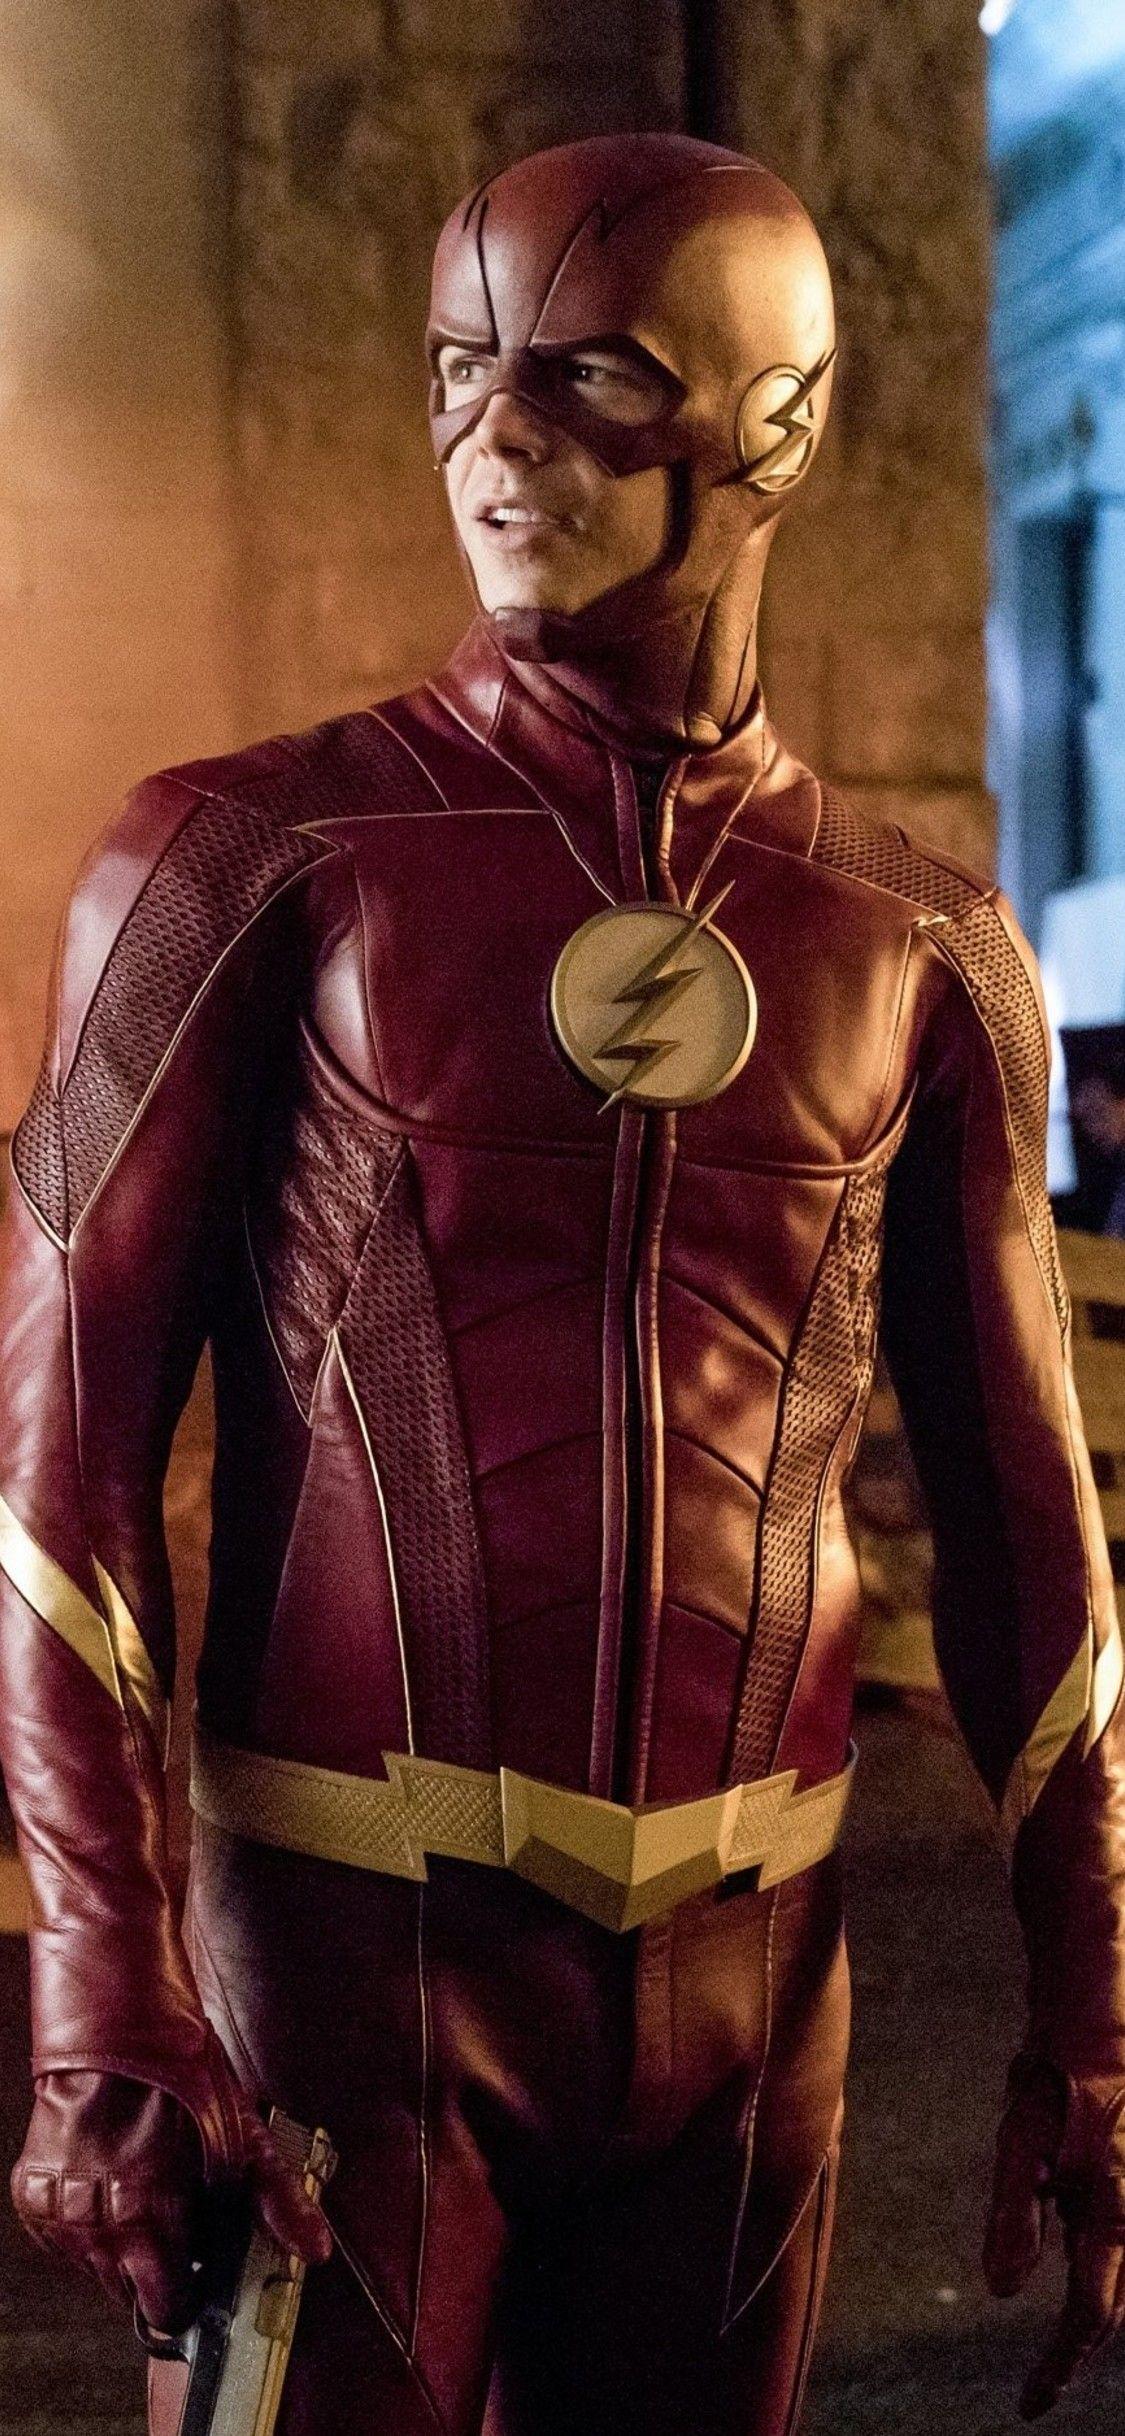 Barry Allen As Flash In The Flash Season 4 2017